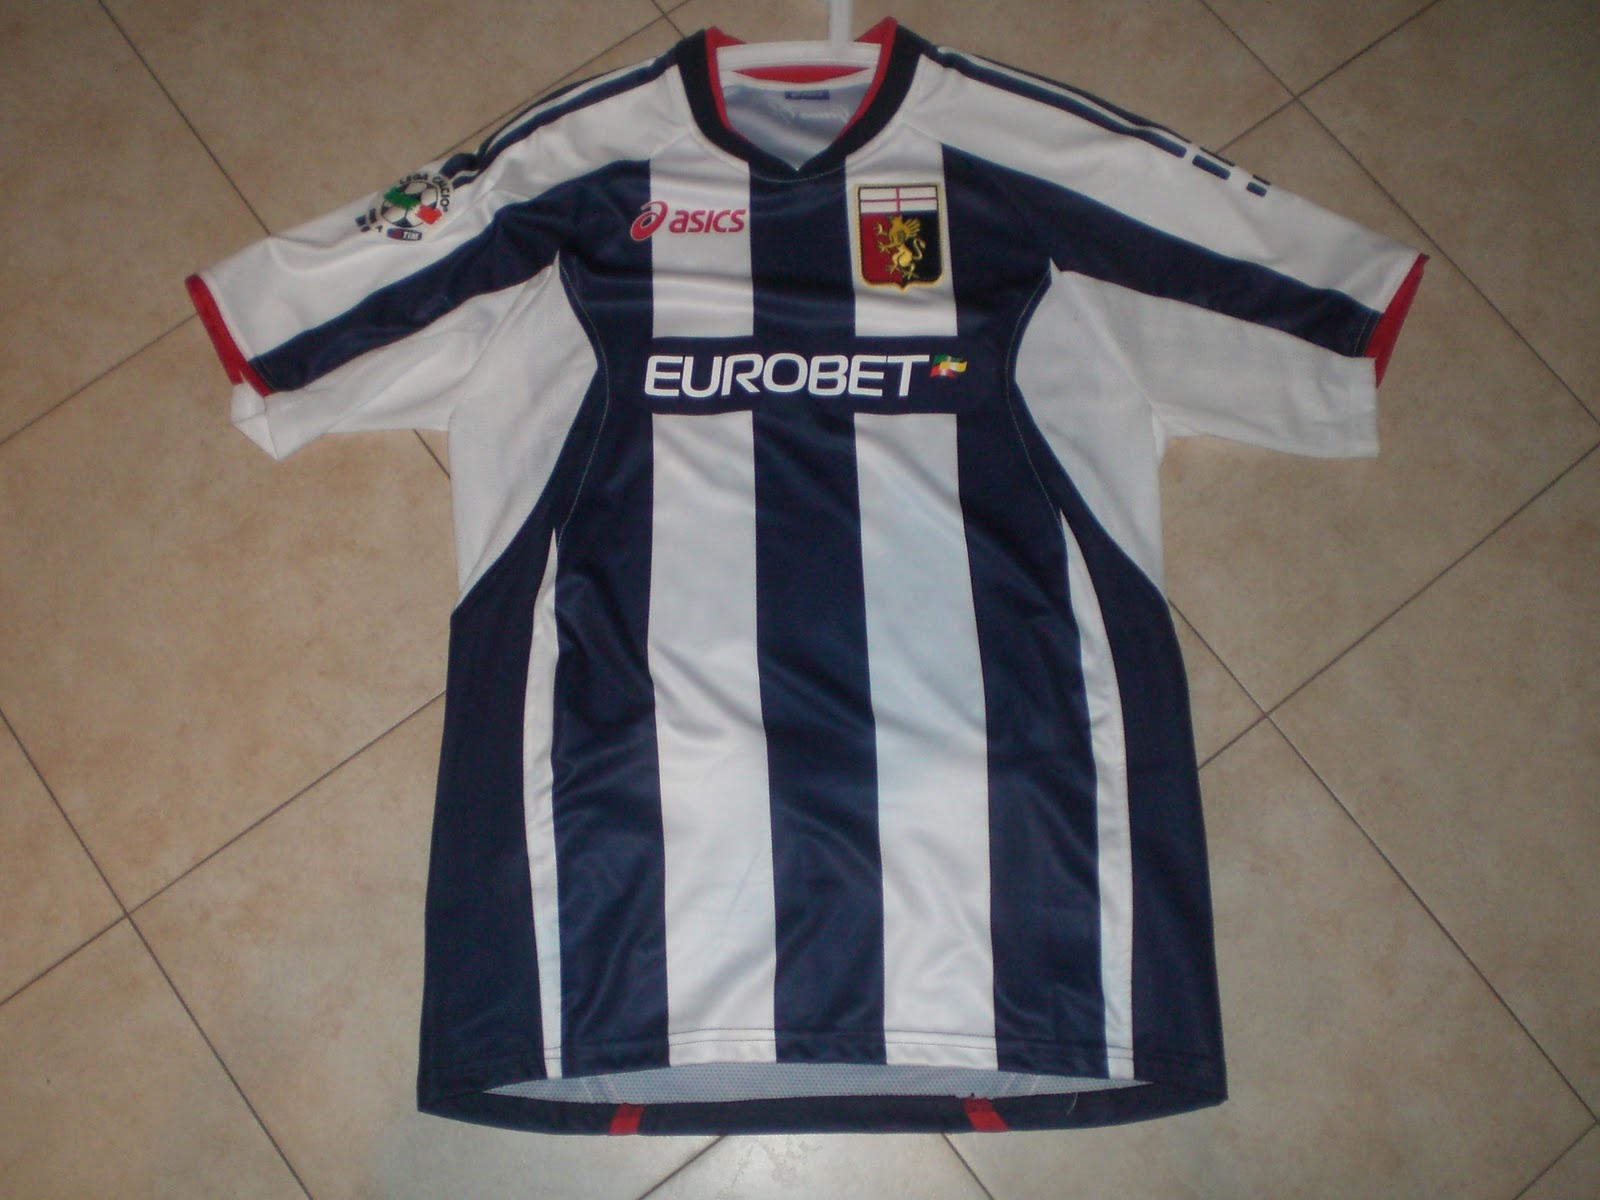 Genoa 2008/09 Third